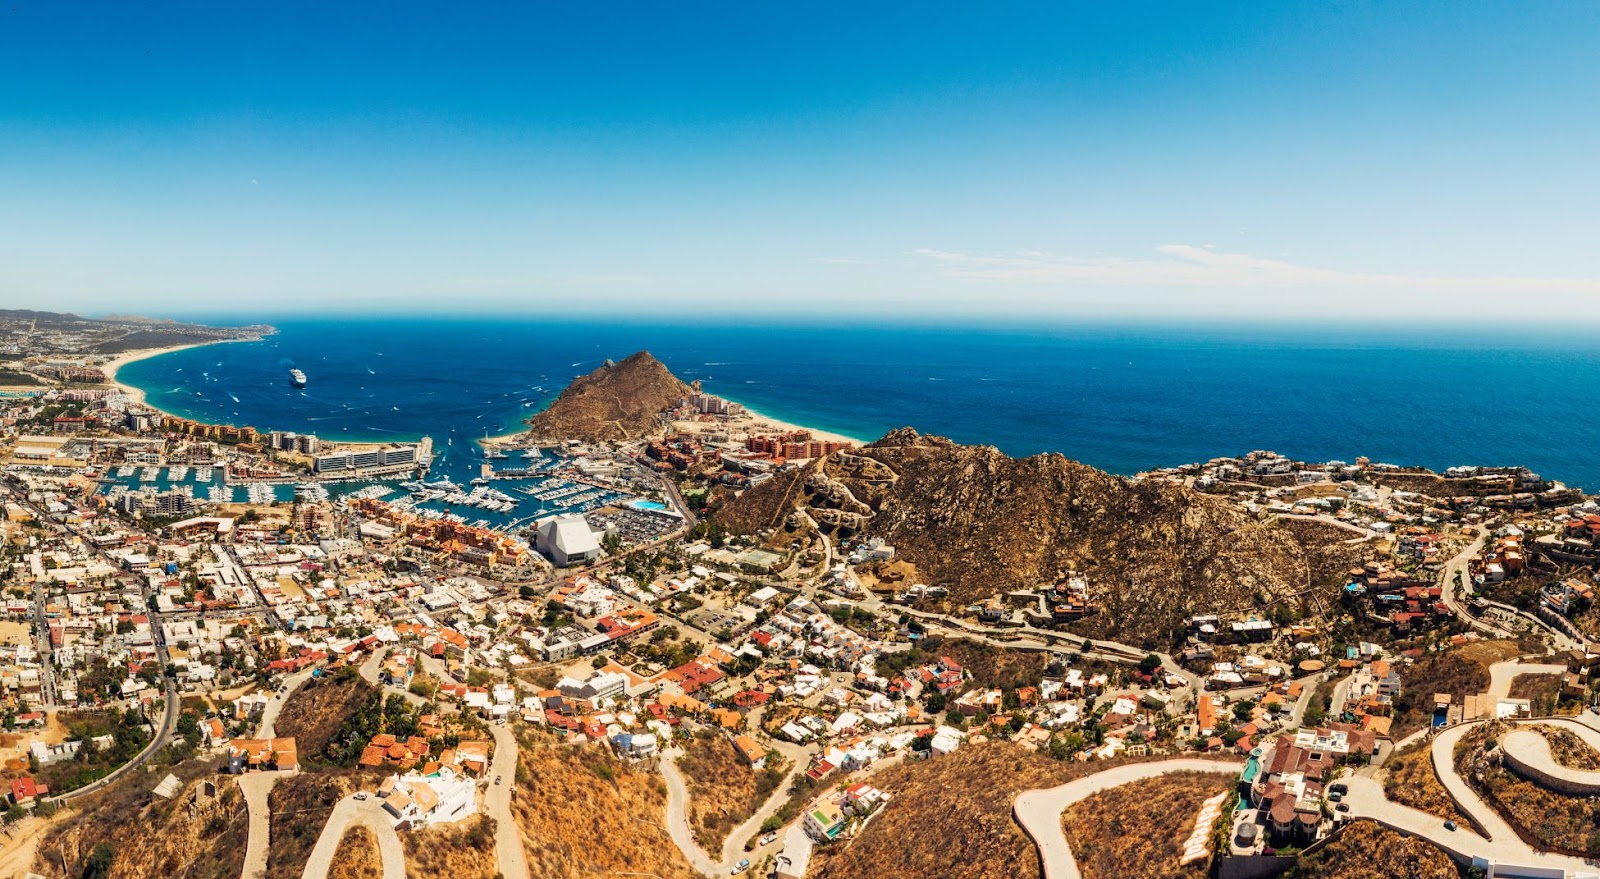 Panoramic view of Cabo San Lucas